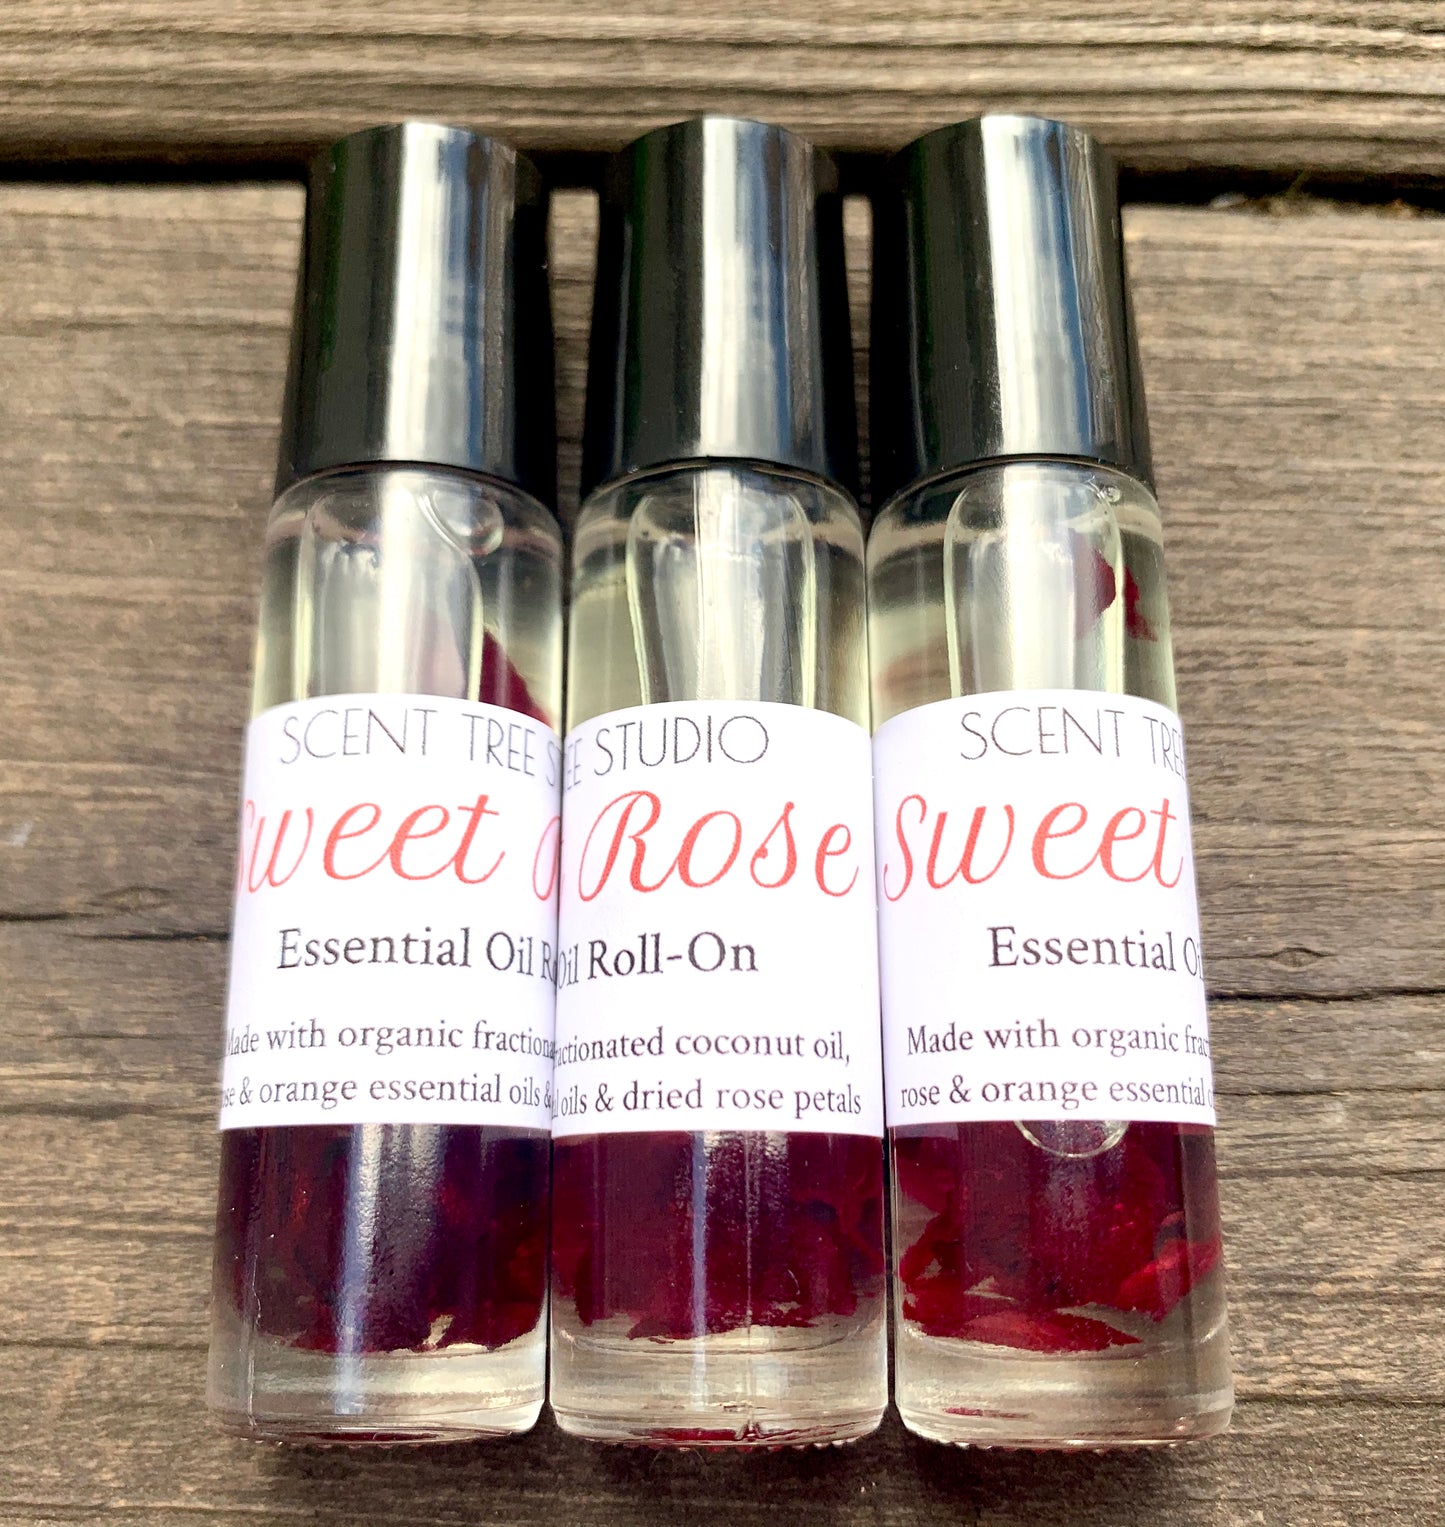 Sweet Rose Essential Oil Roll-On - Scent Tree Studio